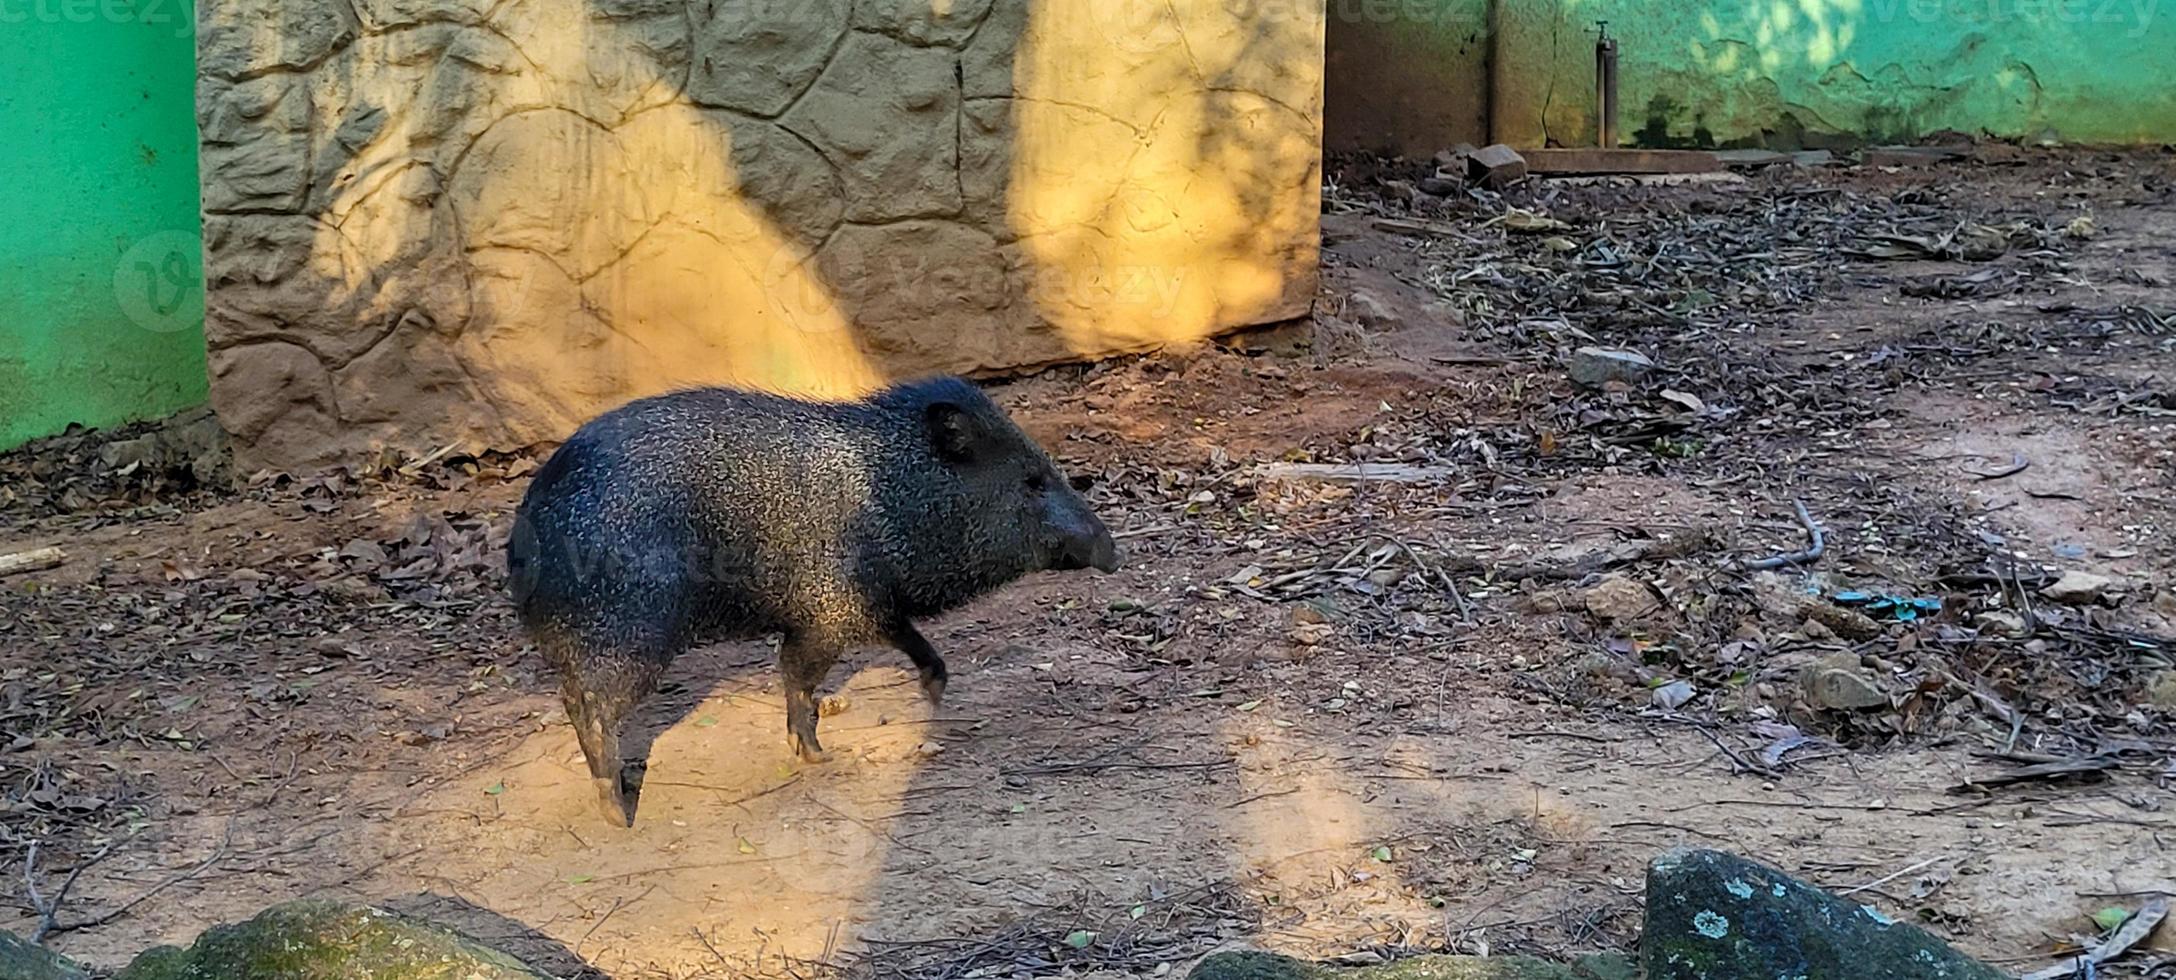 brasiliansk vild gris känd som peccary foto